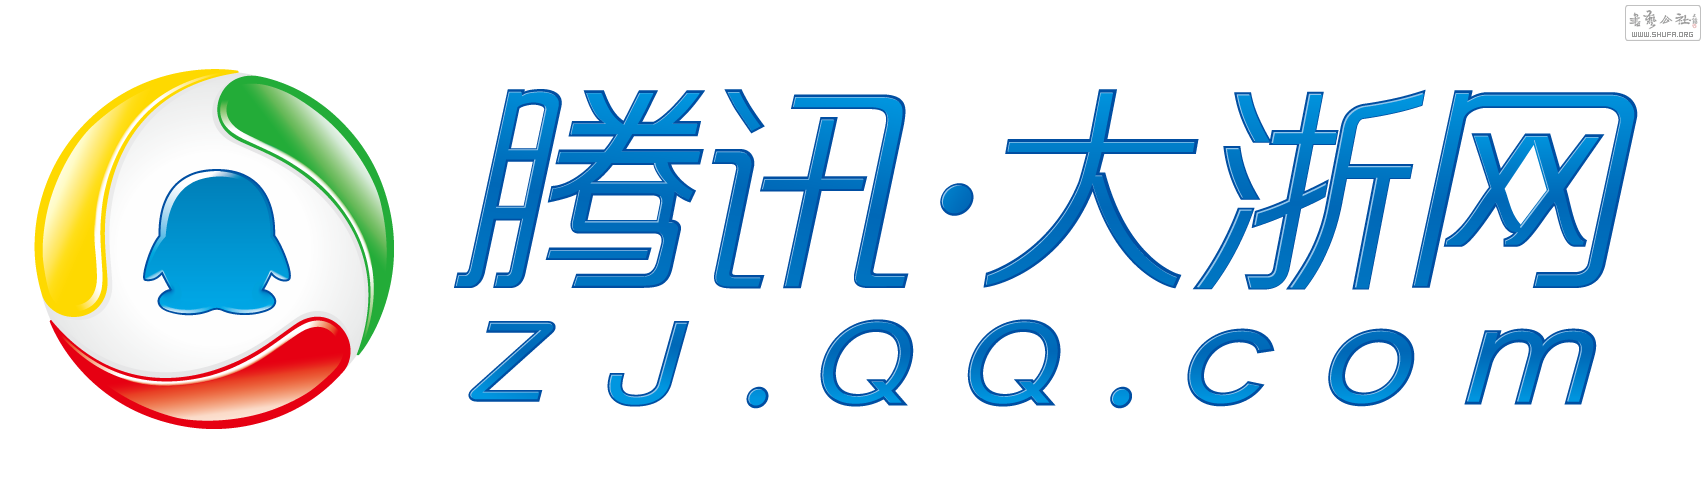 Ѷnew logo.png